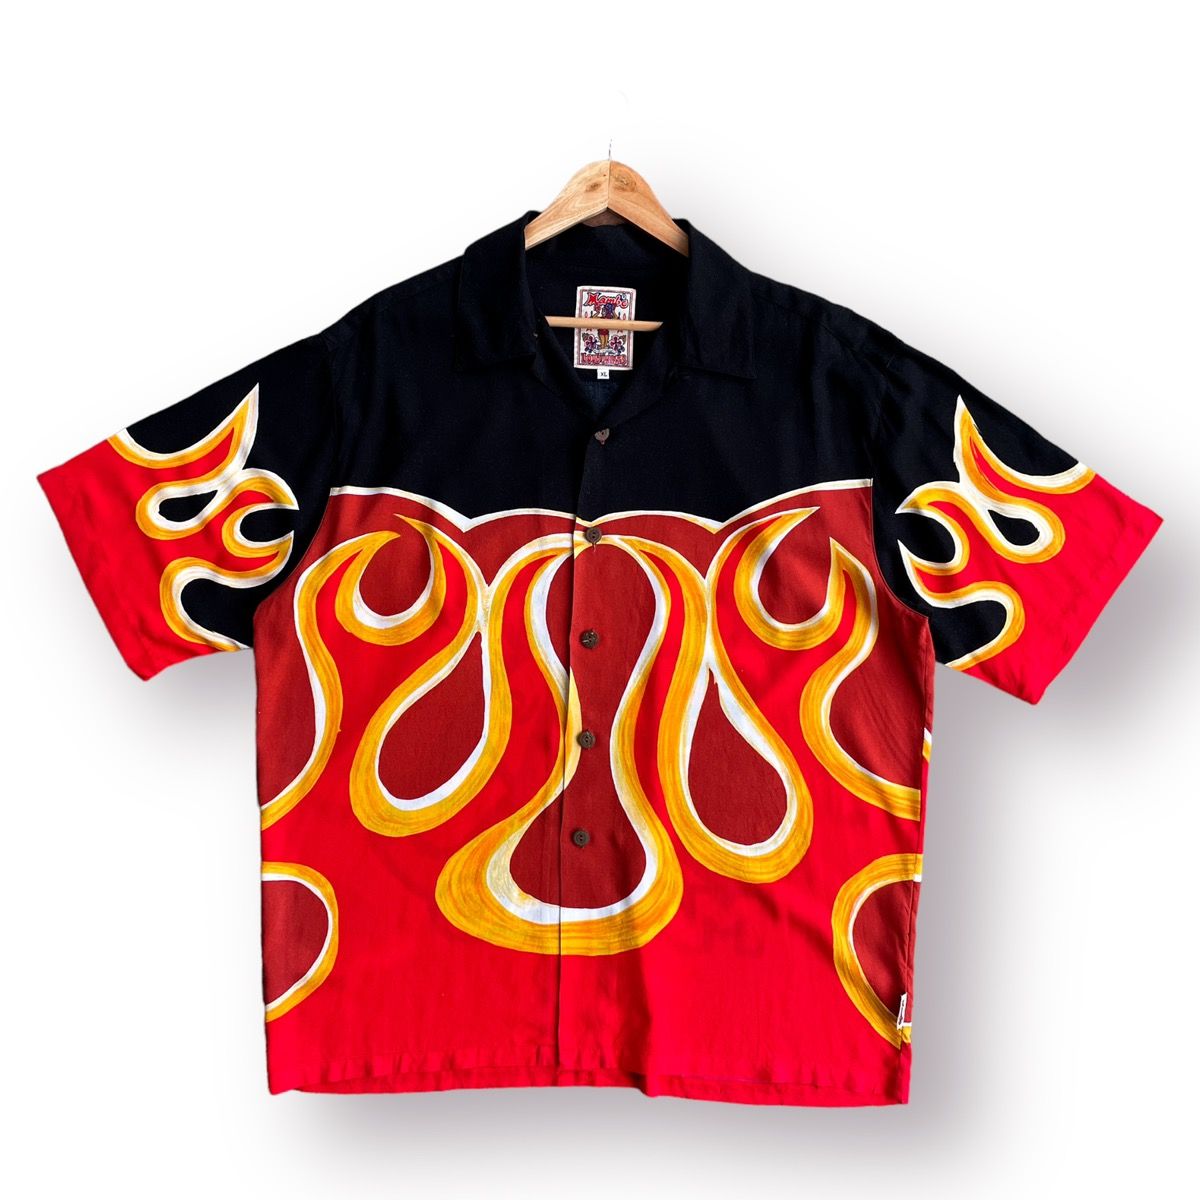 BlingArchive Vintage 90 Mambo Loud Shirt Flame Shirt